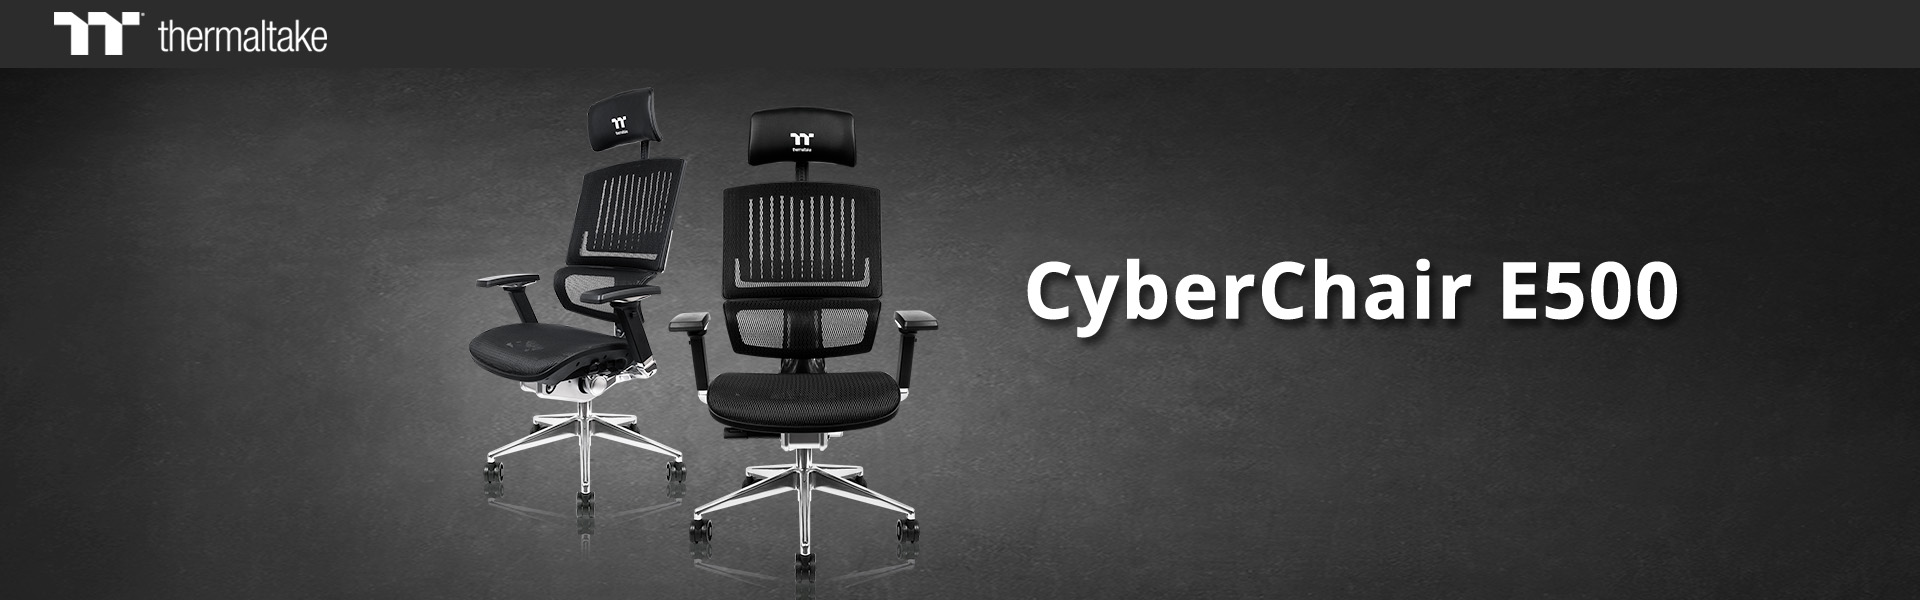 the new thermaltake cyberchair e500 2 Thermaltake เปิดตัวเก้าอี้ CyberChair E500 รุ่นใหม่ล่าสุดสำหรับสายทำงานที่เน้นความสะดวกสบายสายสุขภาพอย่างแท้จริง